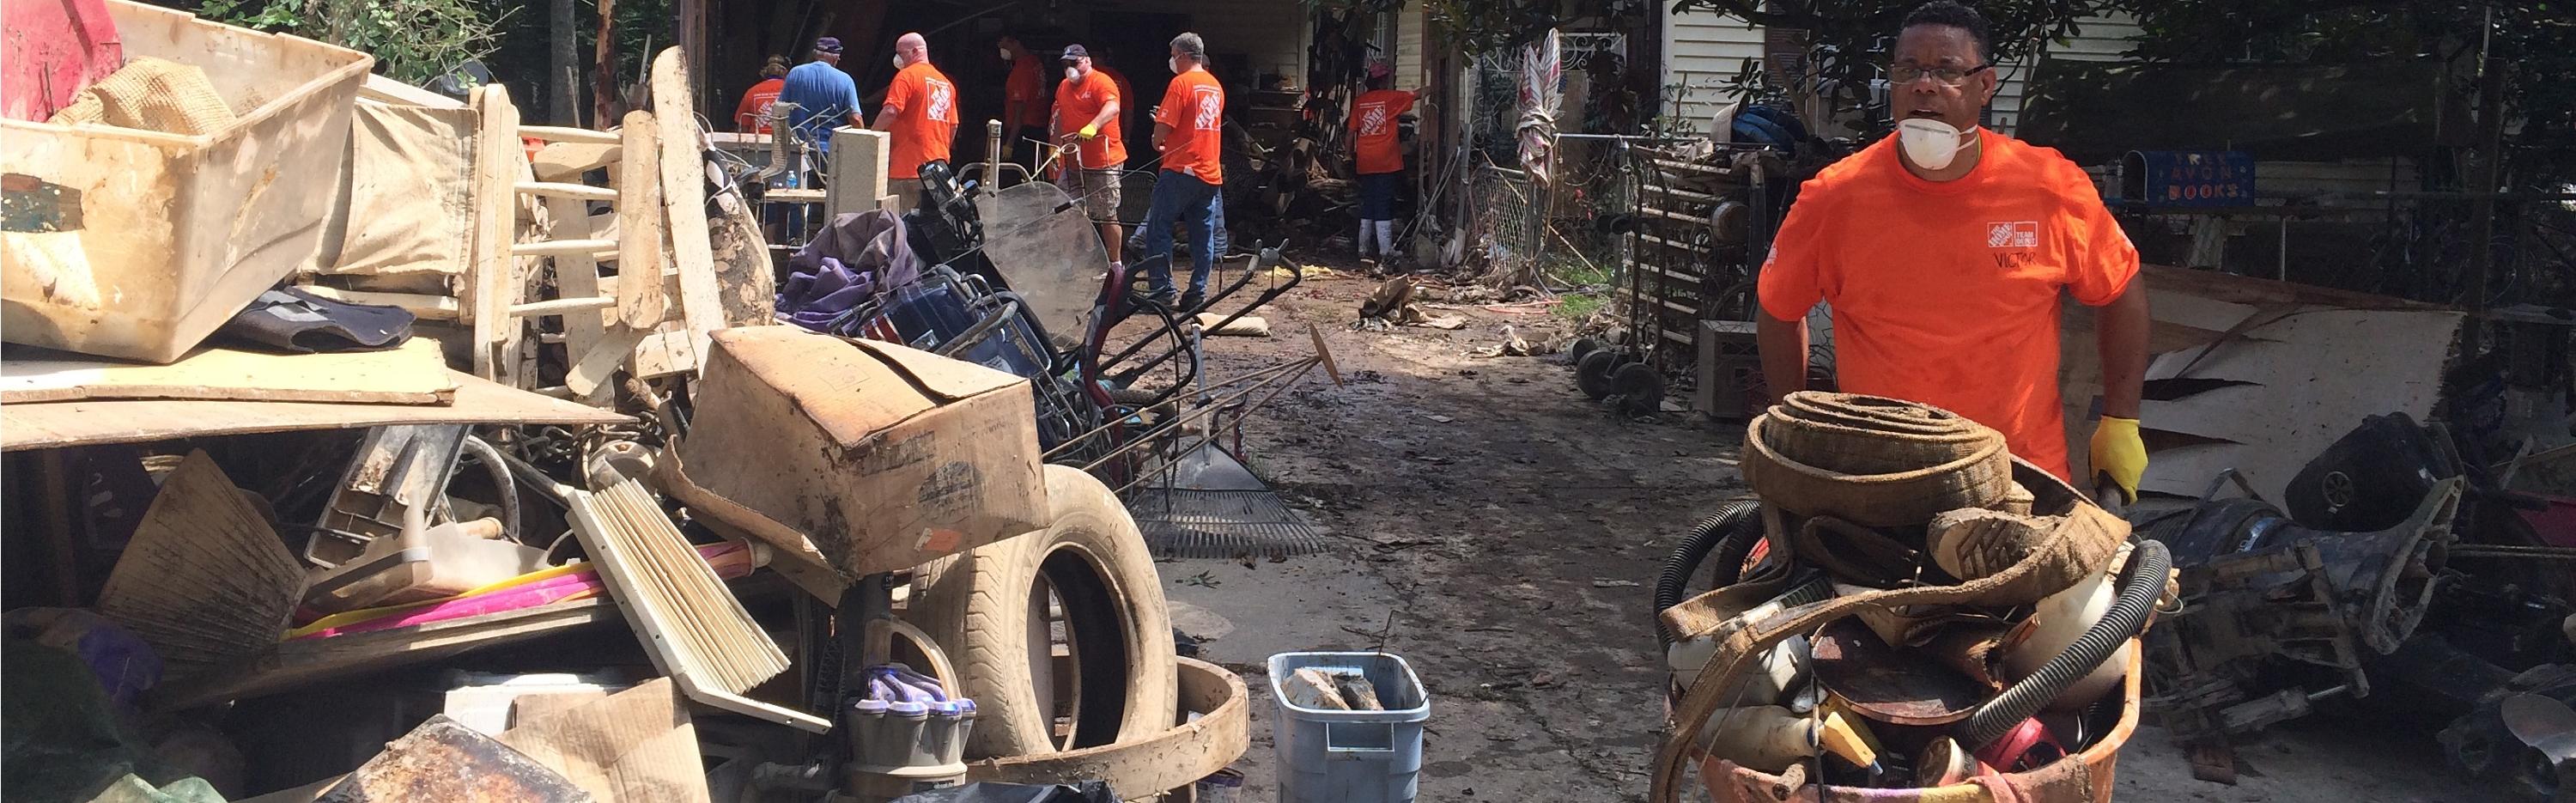 Team Depot volunteers sort through flooding debris in Louisiana 